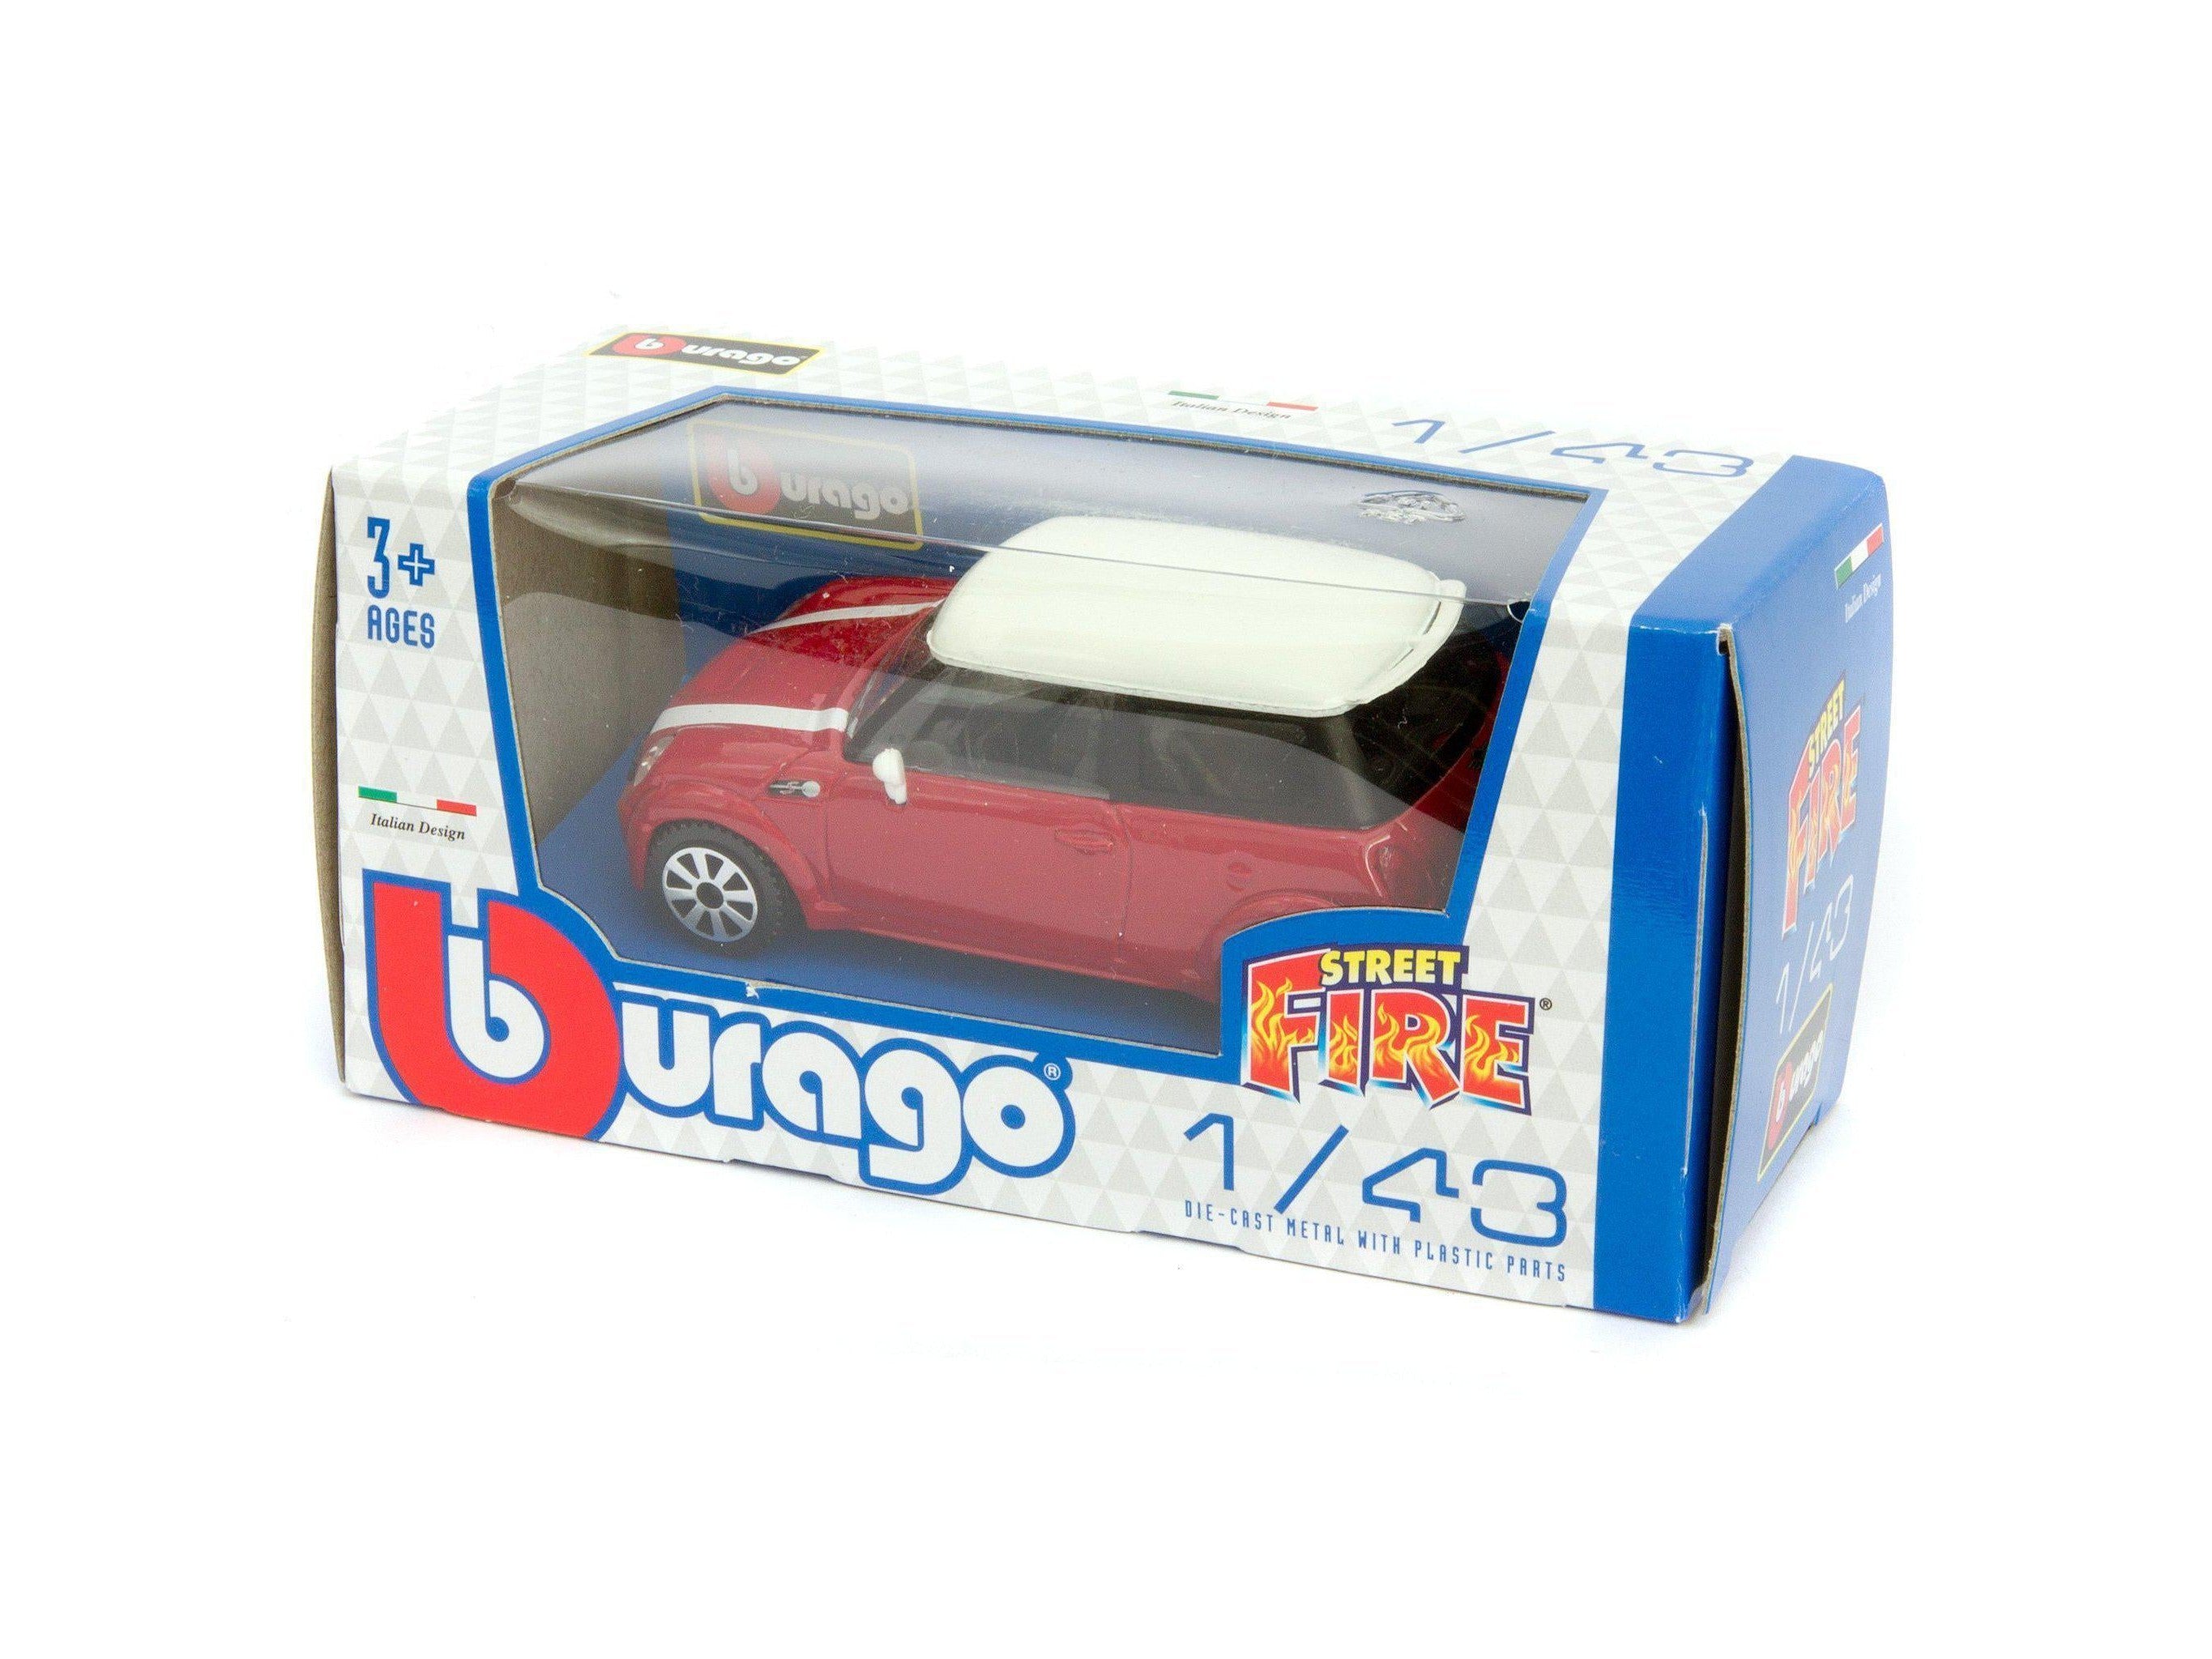 Burago cars in the box 1/43 scale 